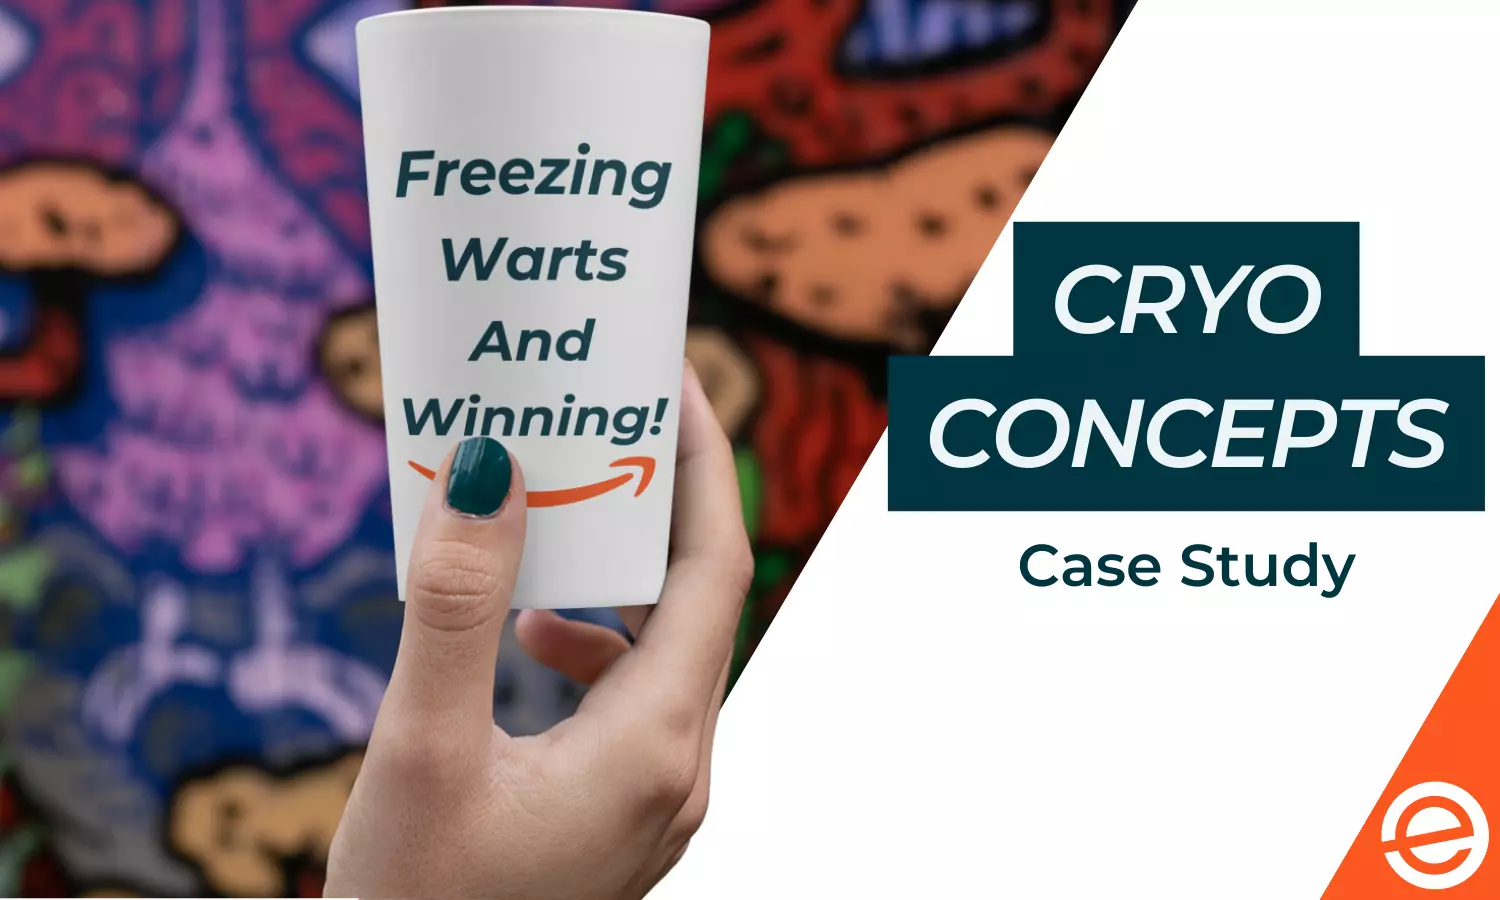 Cryo Concepts Case Study